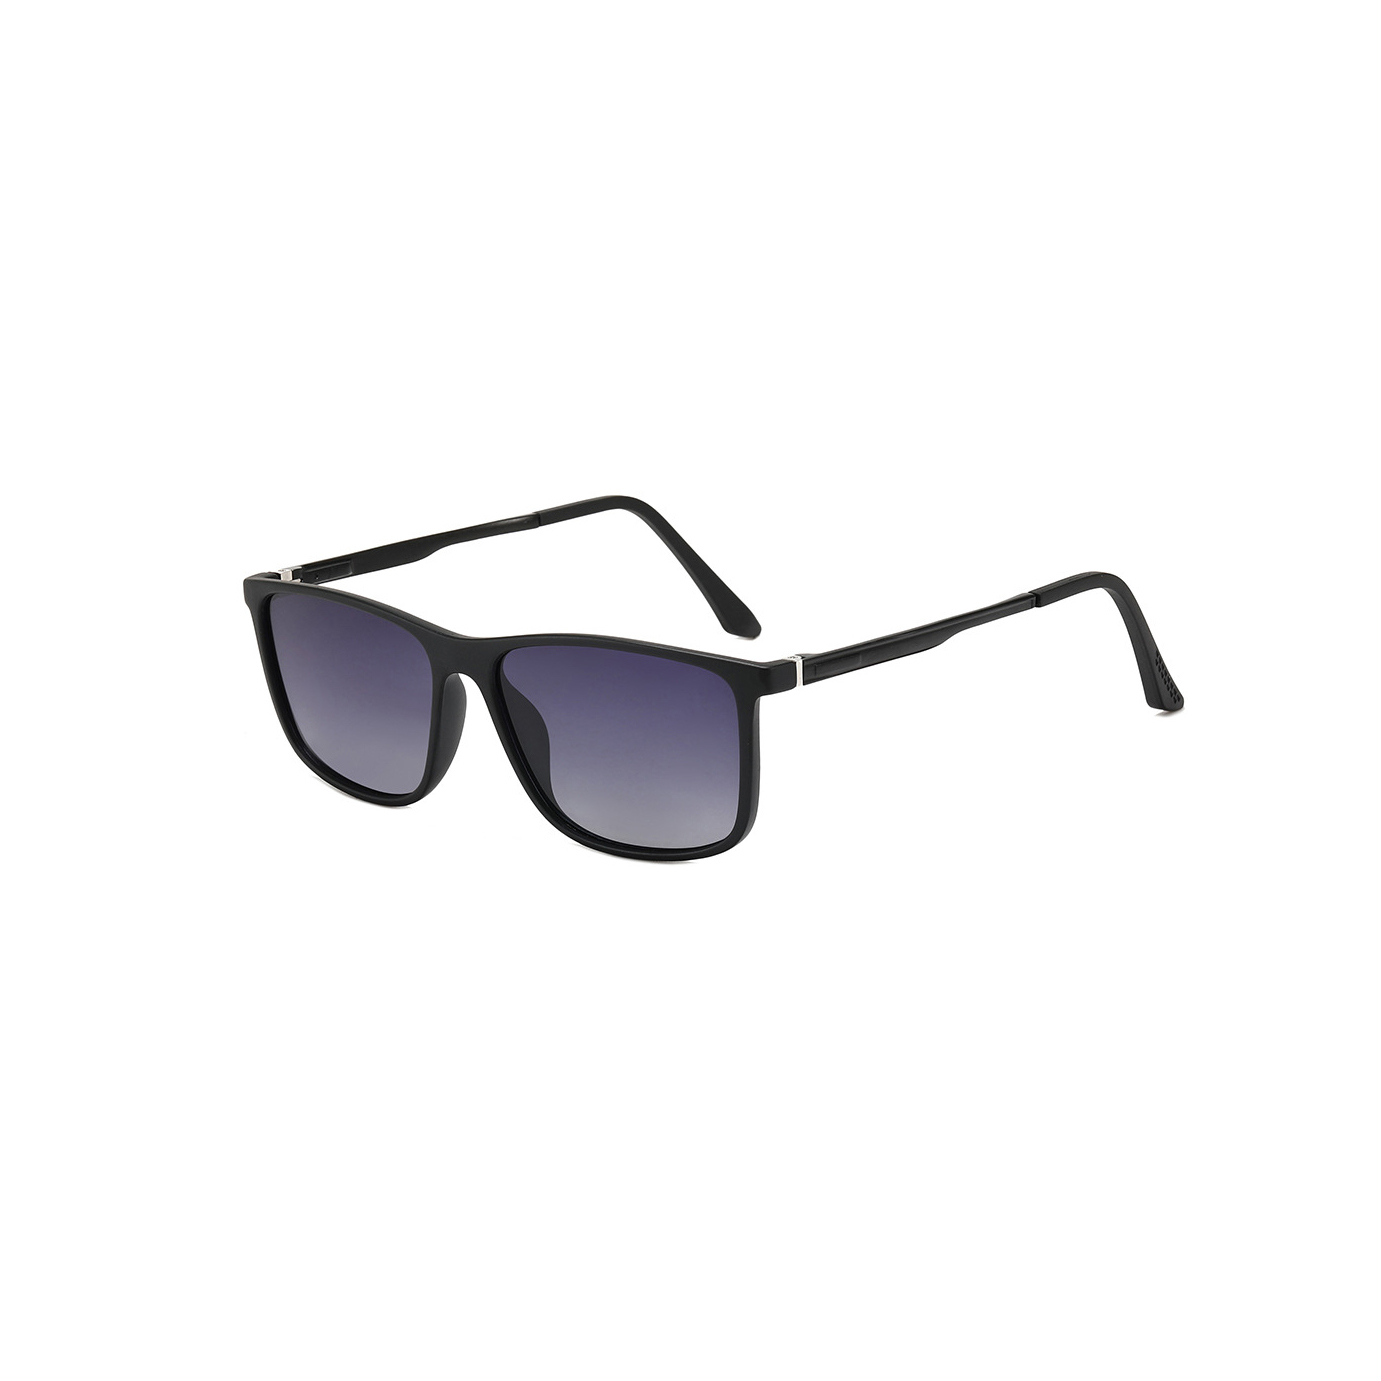 TR 90 Classic Square Frame  Polarized  Sunglasses for Men